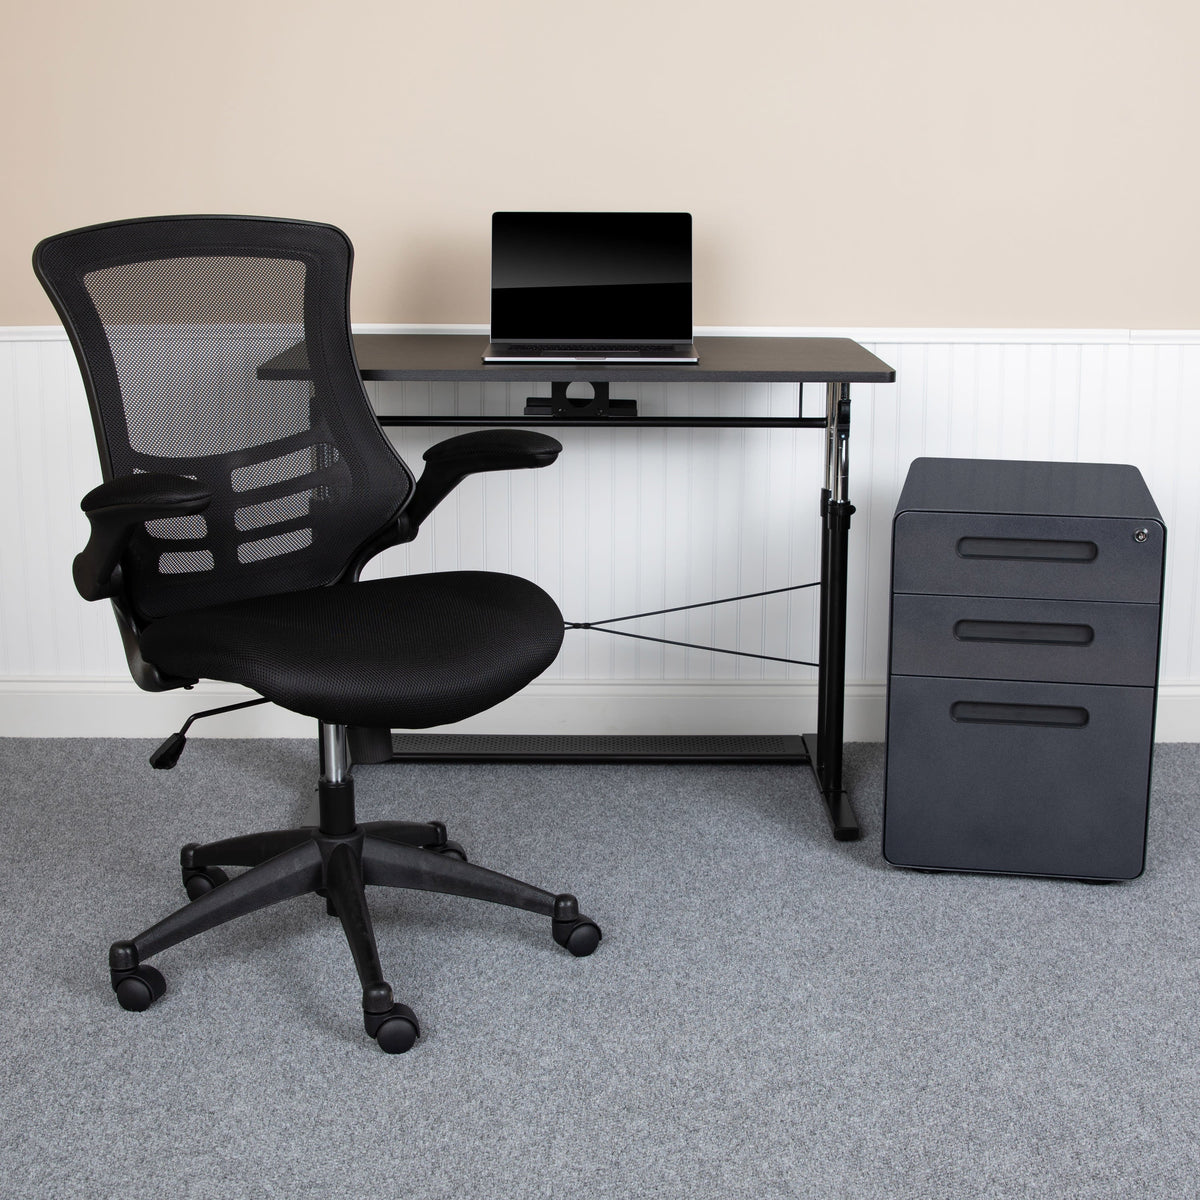 Office Set-Adjustable Computer Desk, Ergonomic Mesh Office Chair, Filing Cabinet